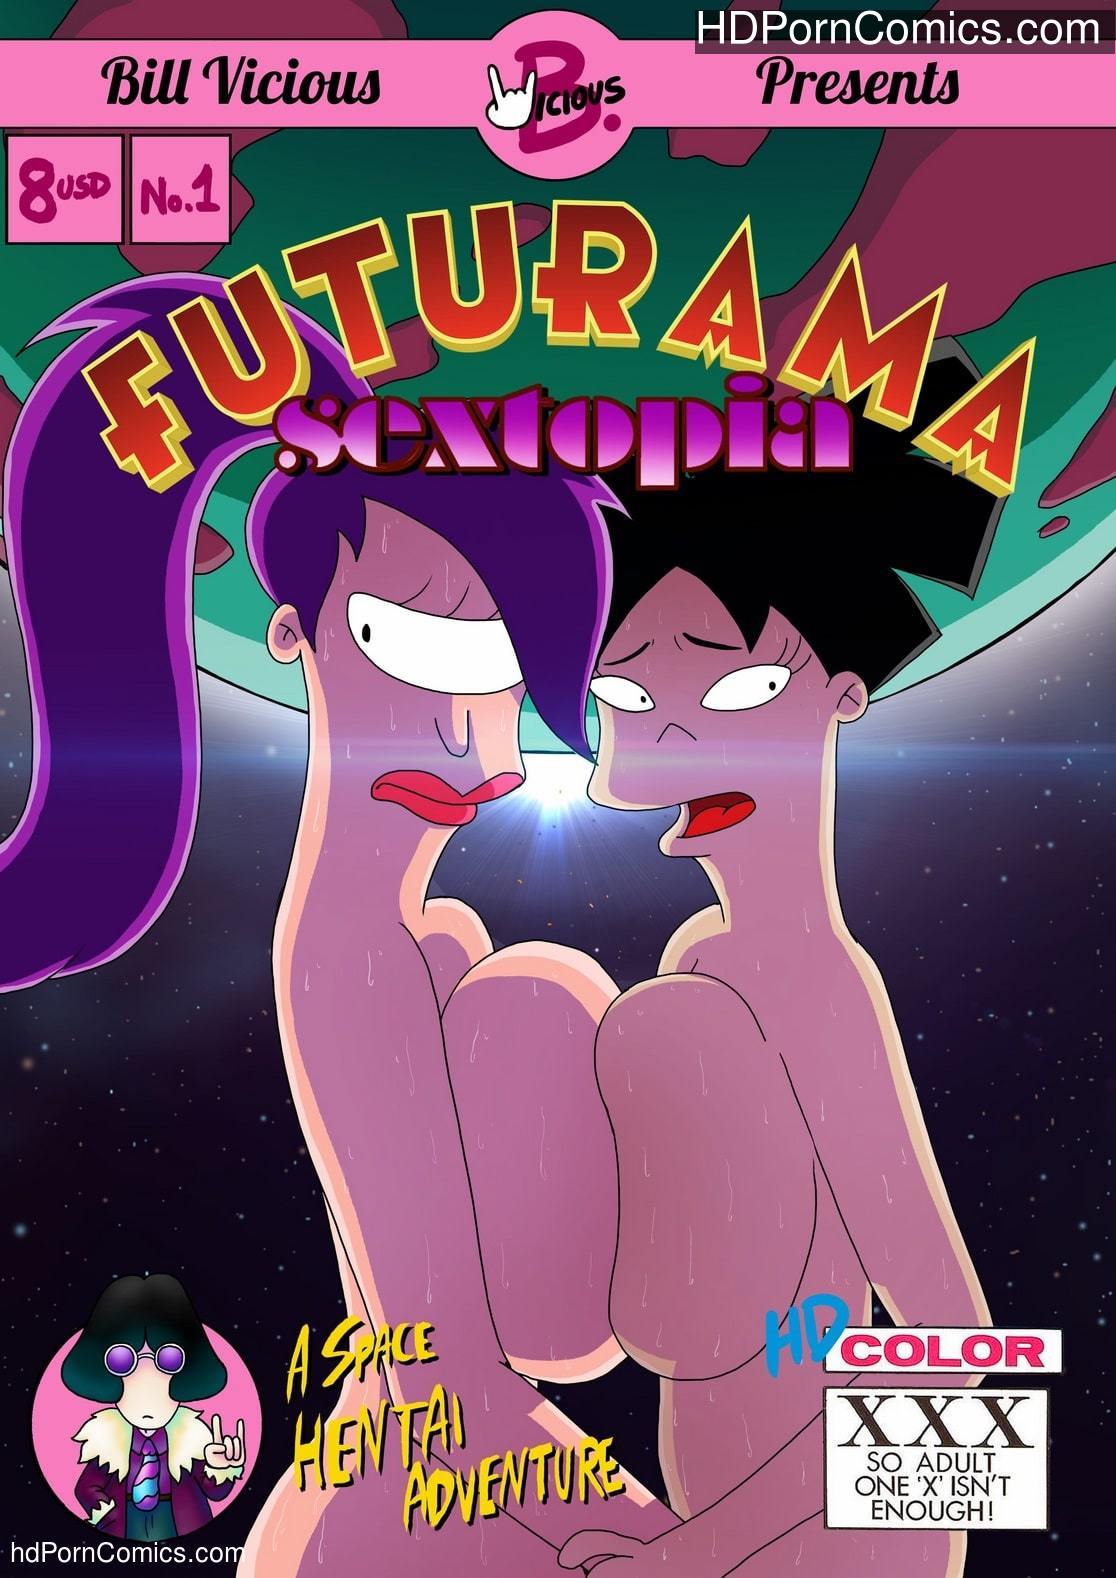 Hardcore Cartoon Sex Futurama - Futurama Sextopia free Porn Comic - HD Porn Comics